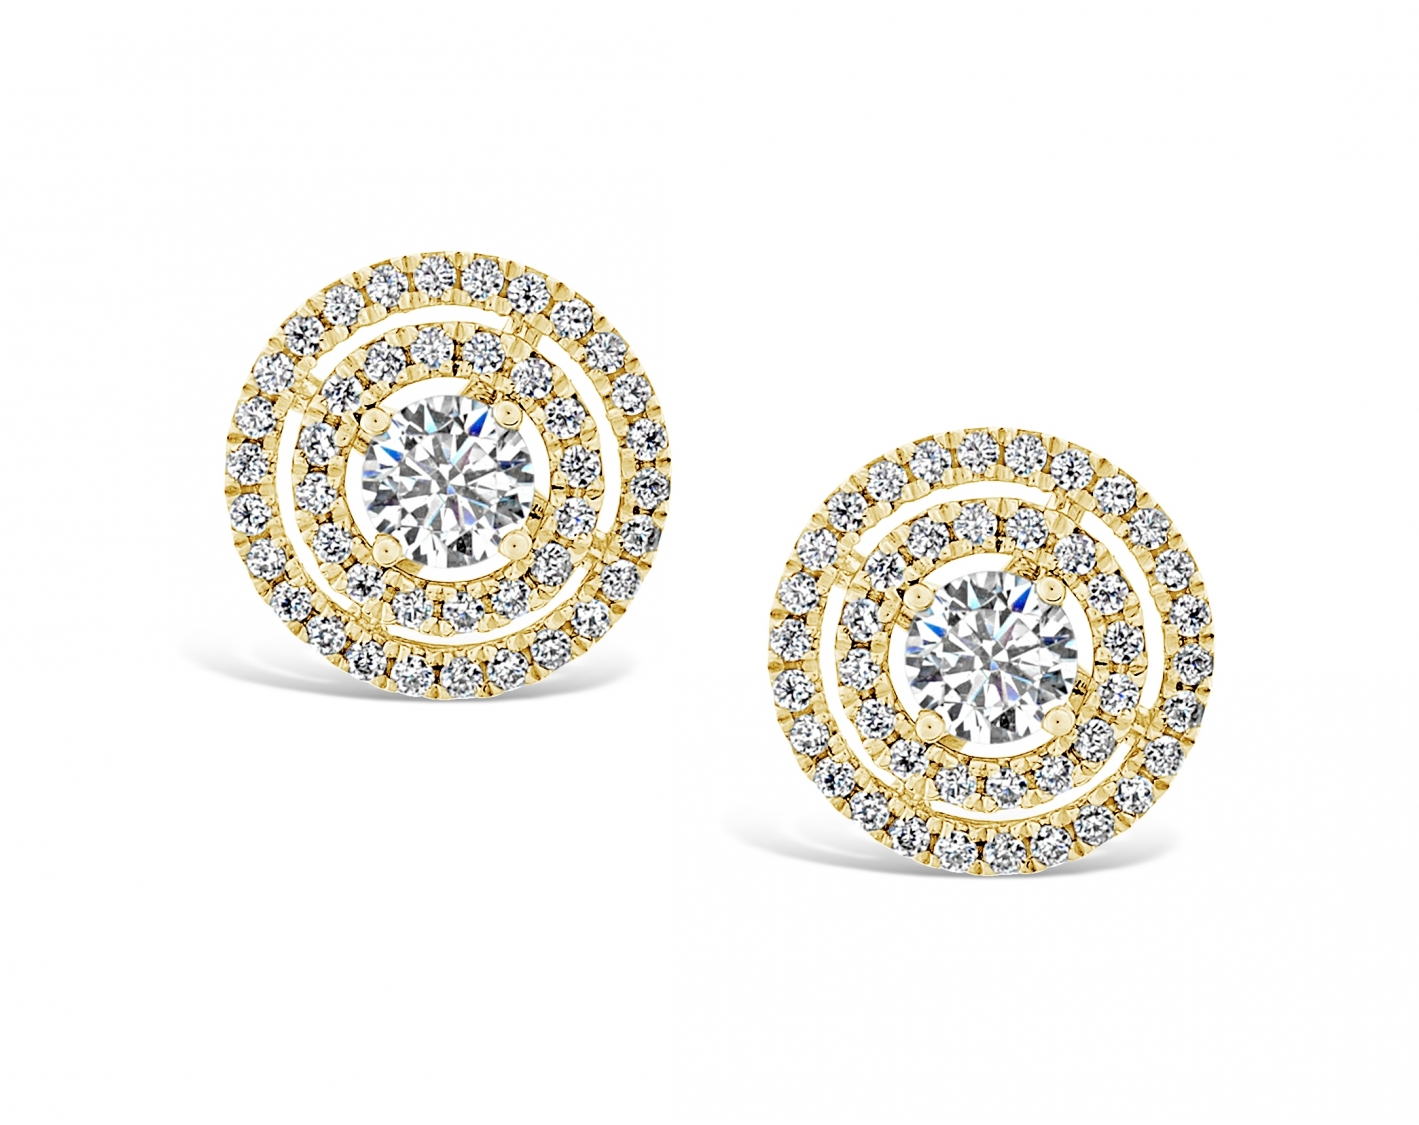 18k yellow gold double halo diamond earring studs